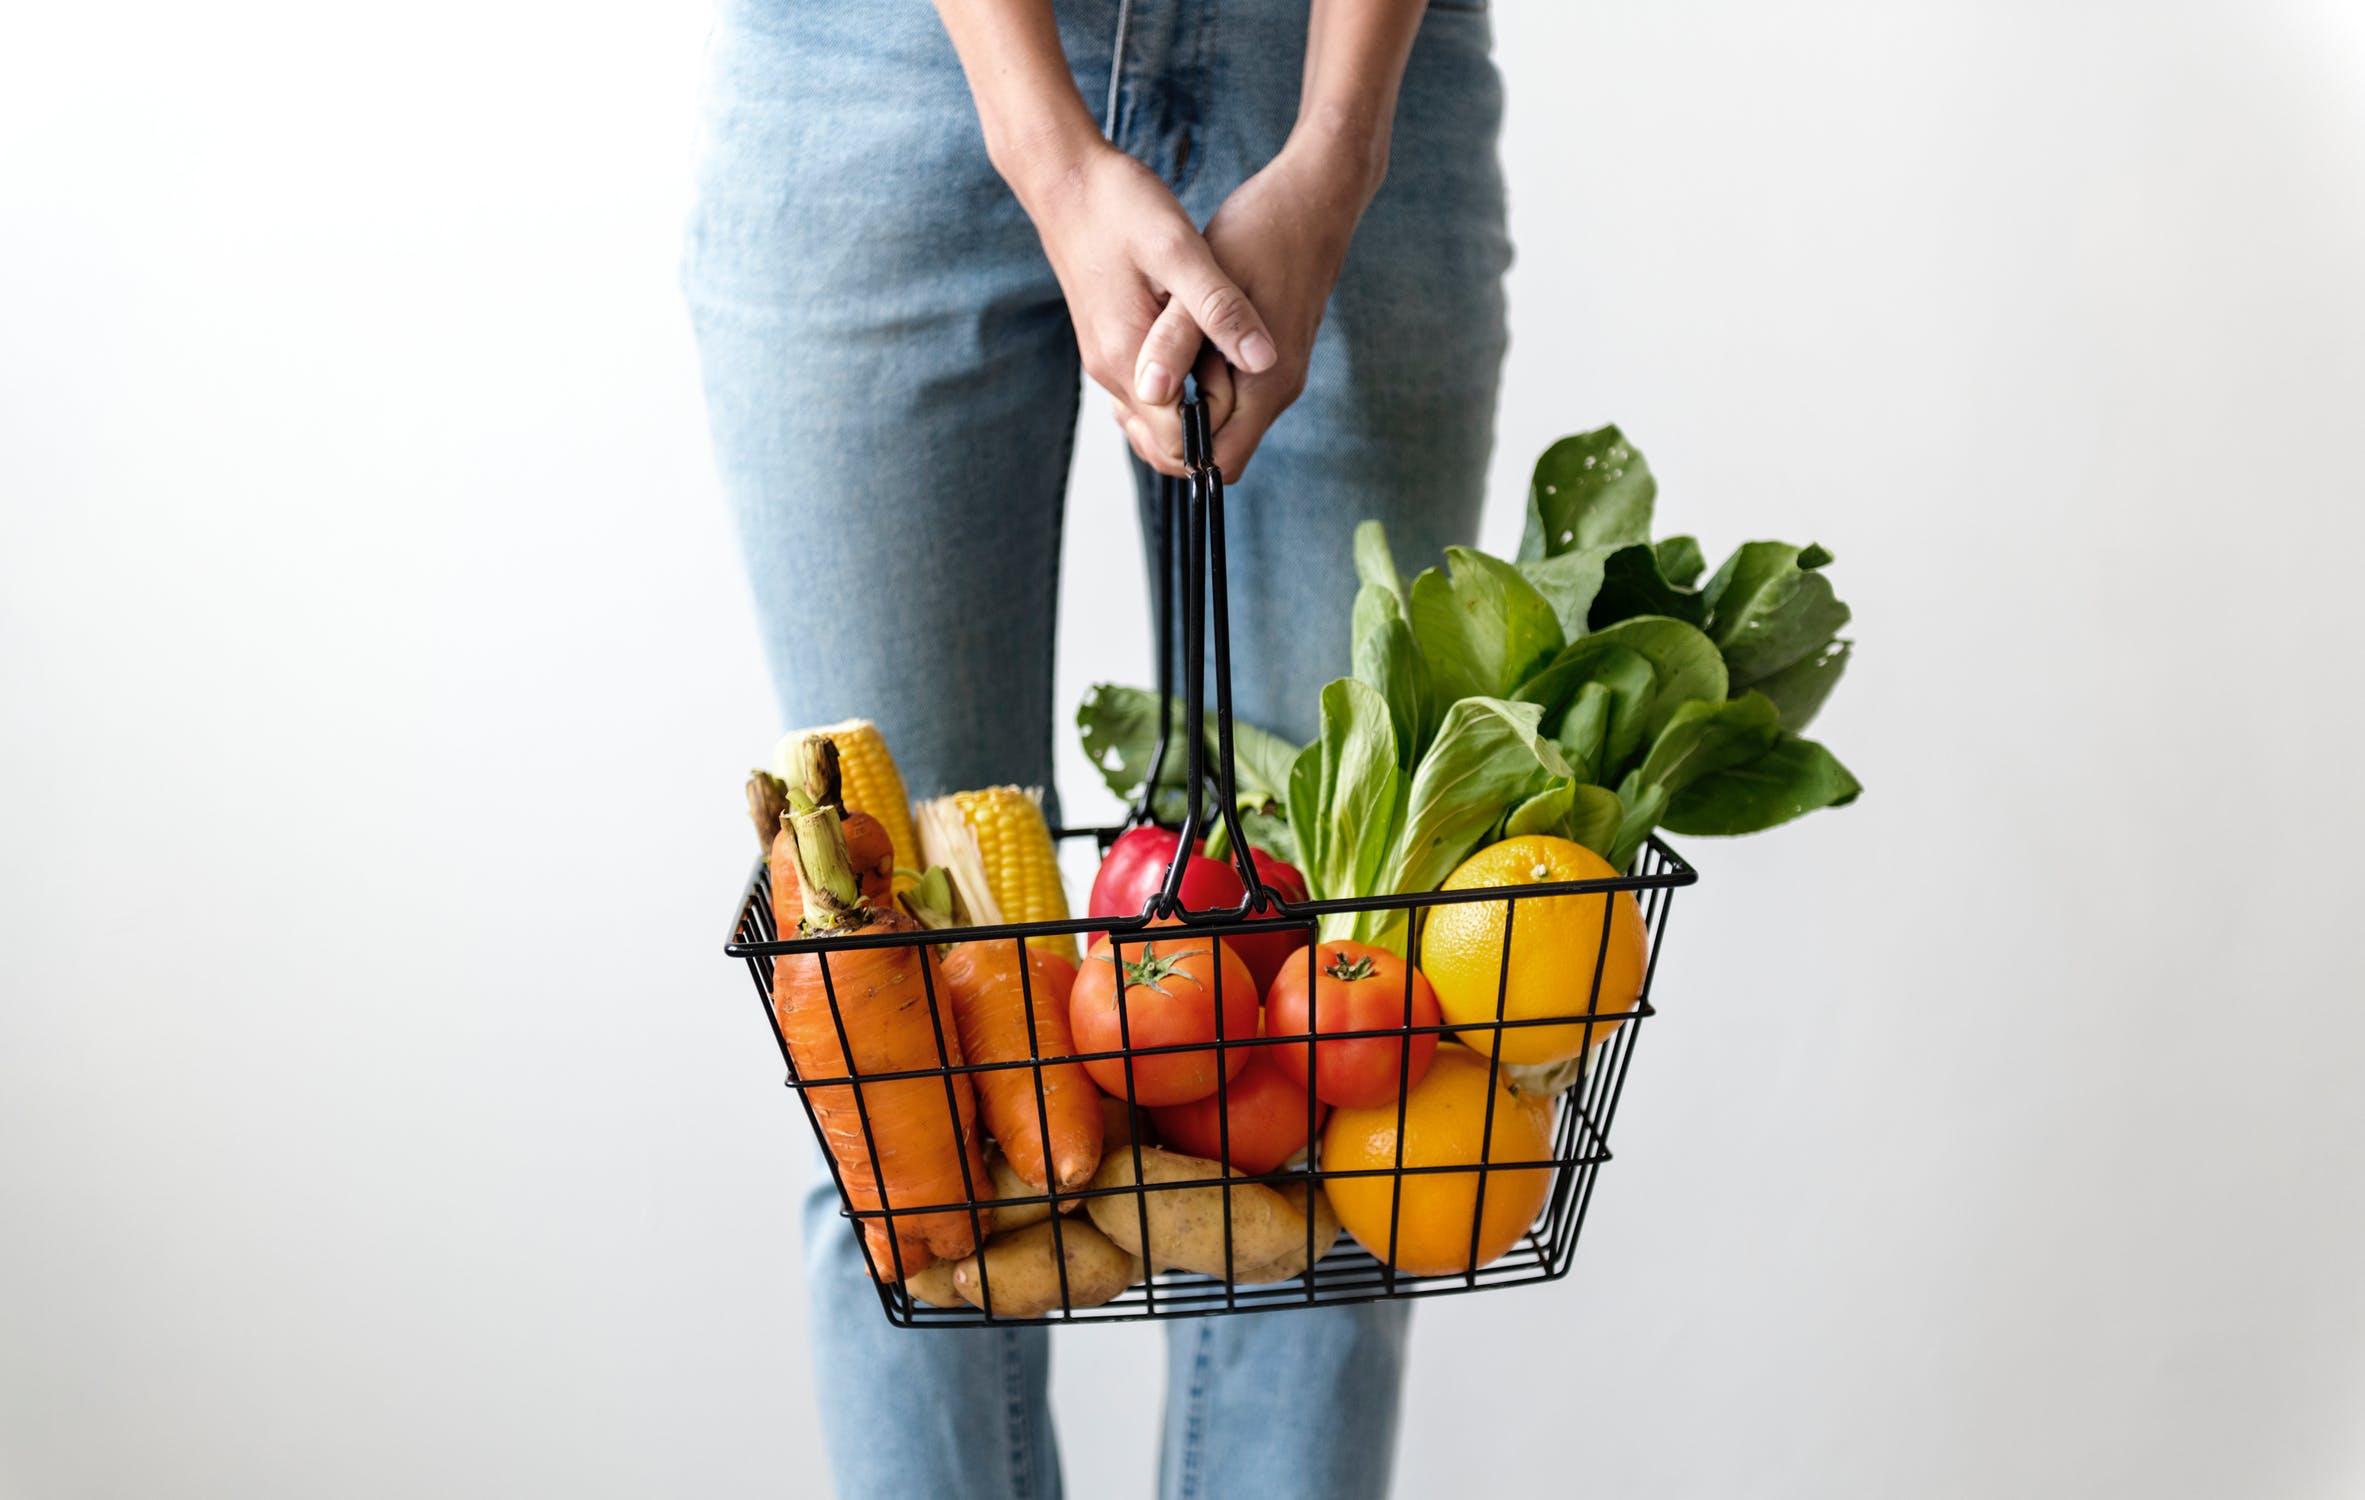 Woman carrying basket of veggies.